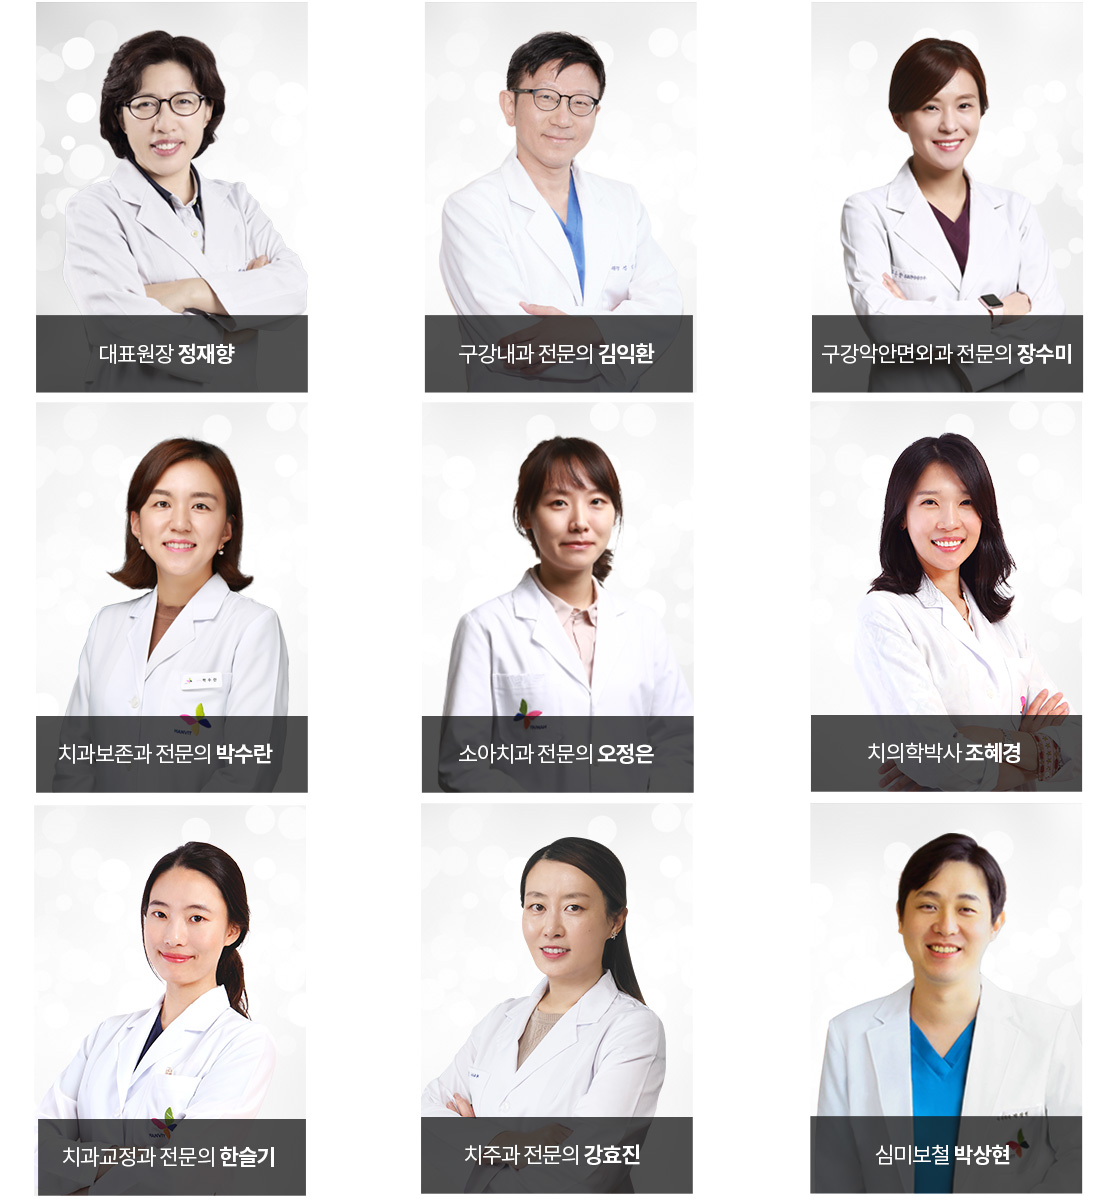 doctor profile image